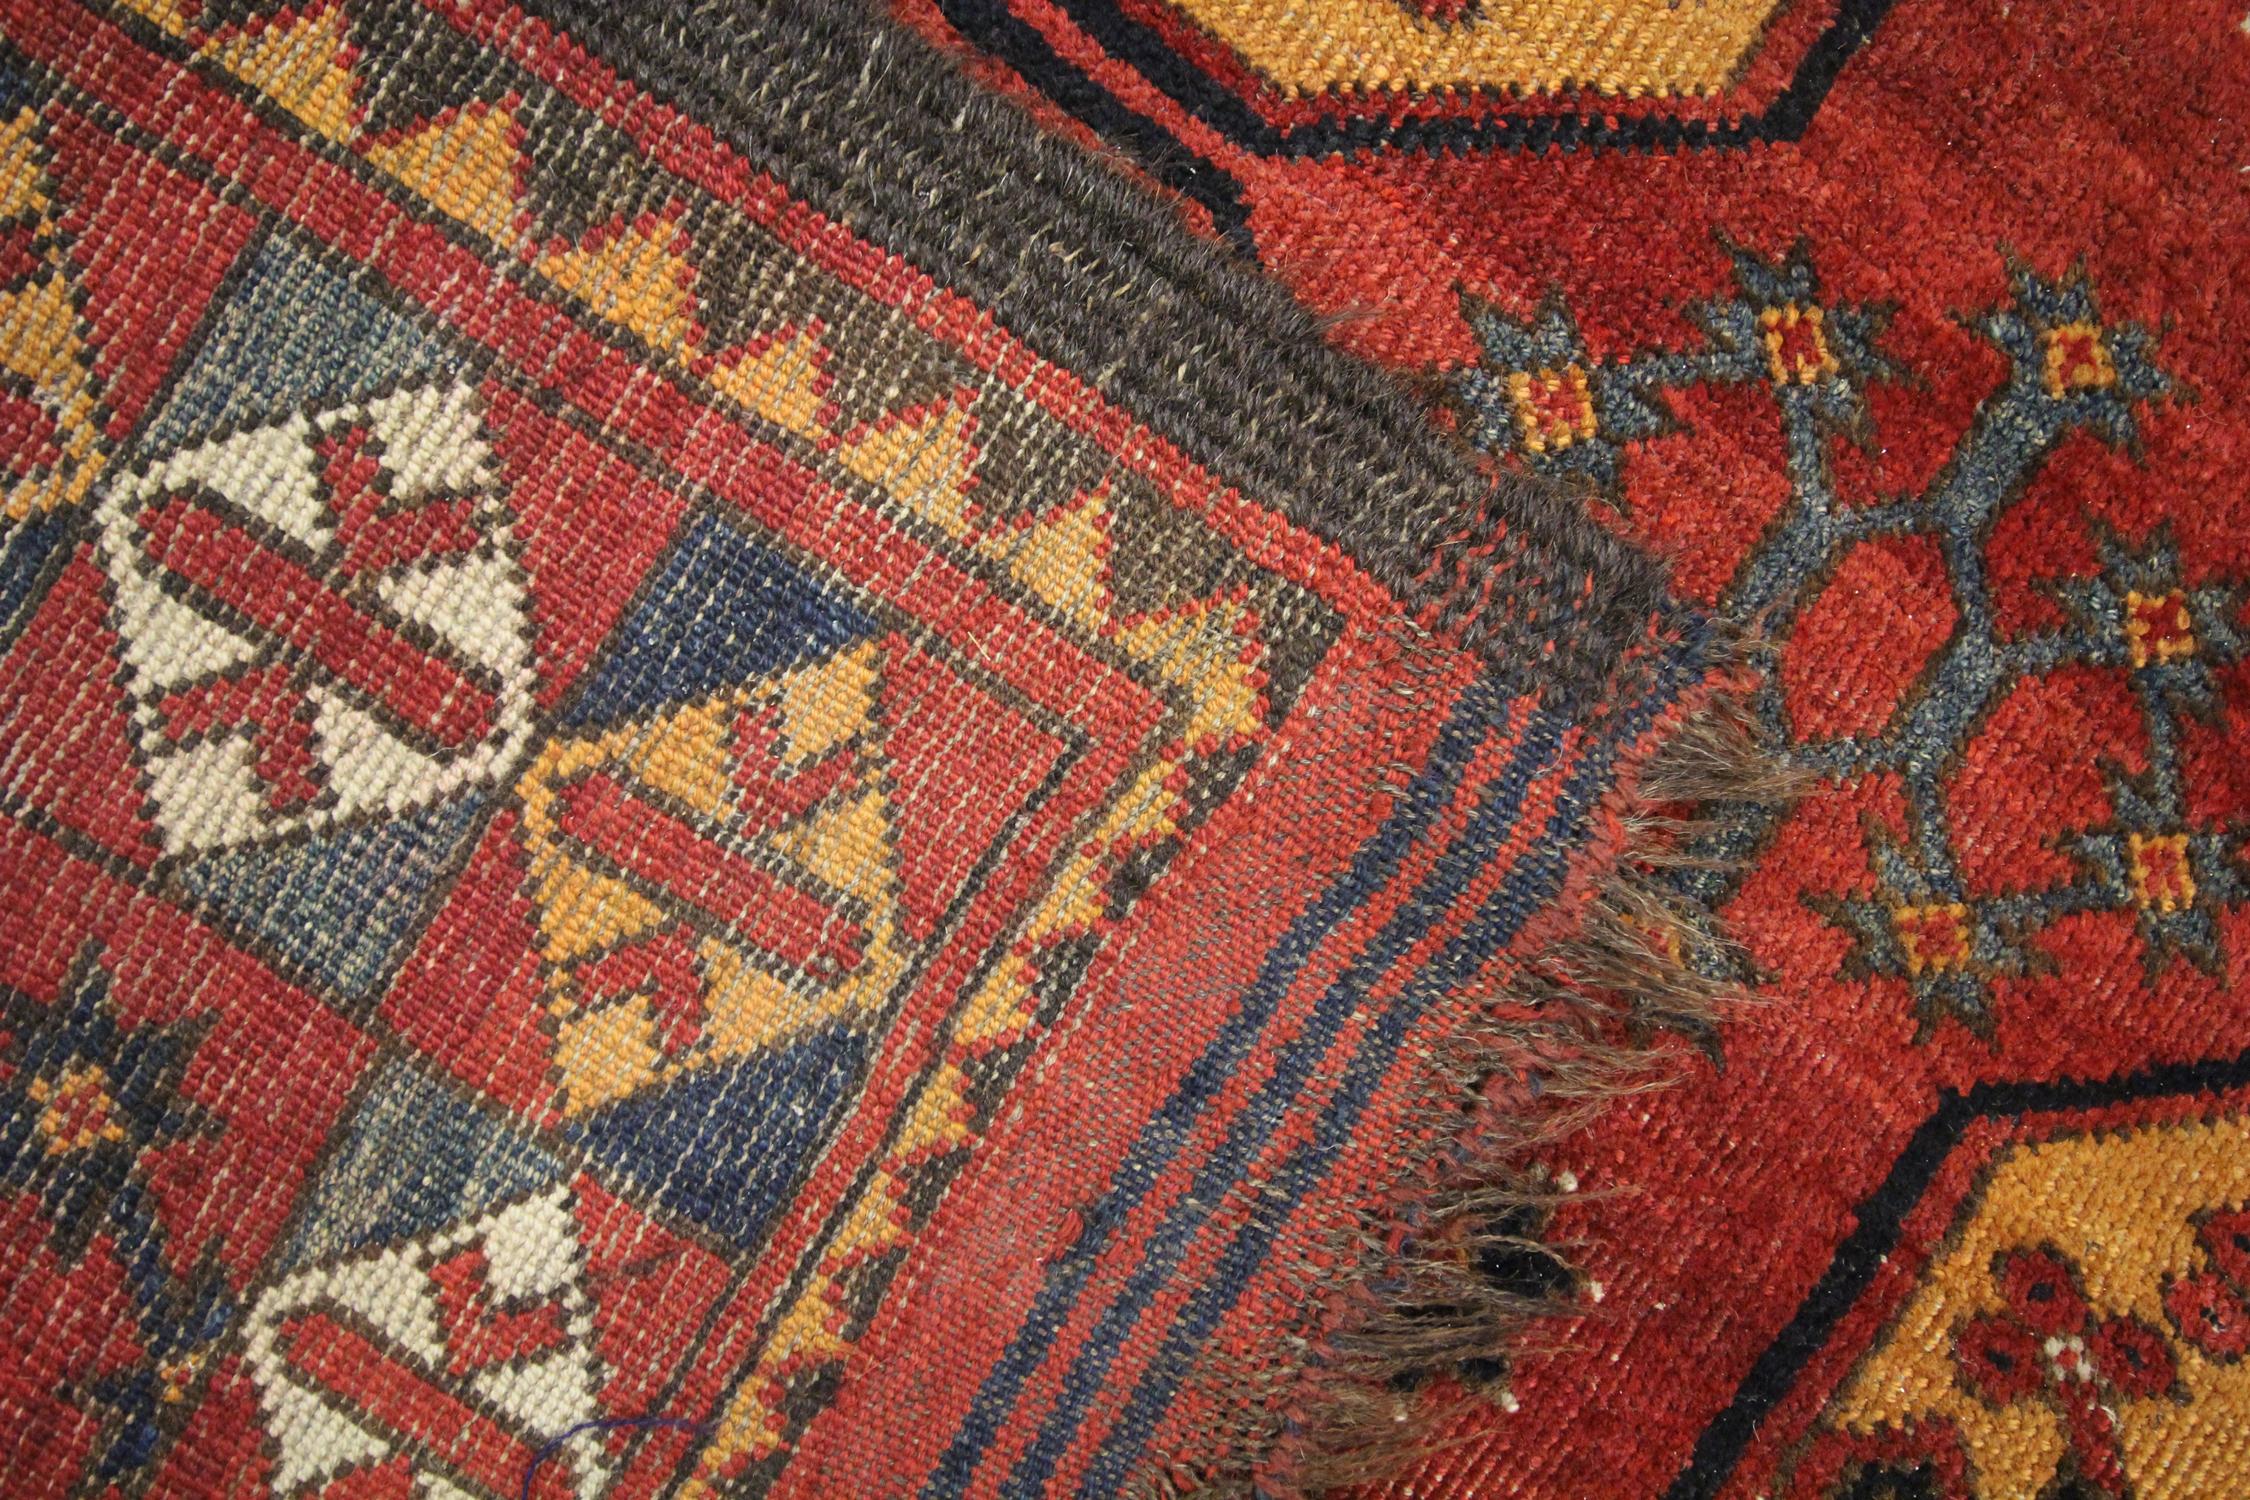 Antique Rugs Turkmen Carpet Area Rug Handwoven Red Orange Wool Rug 3